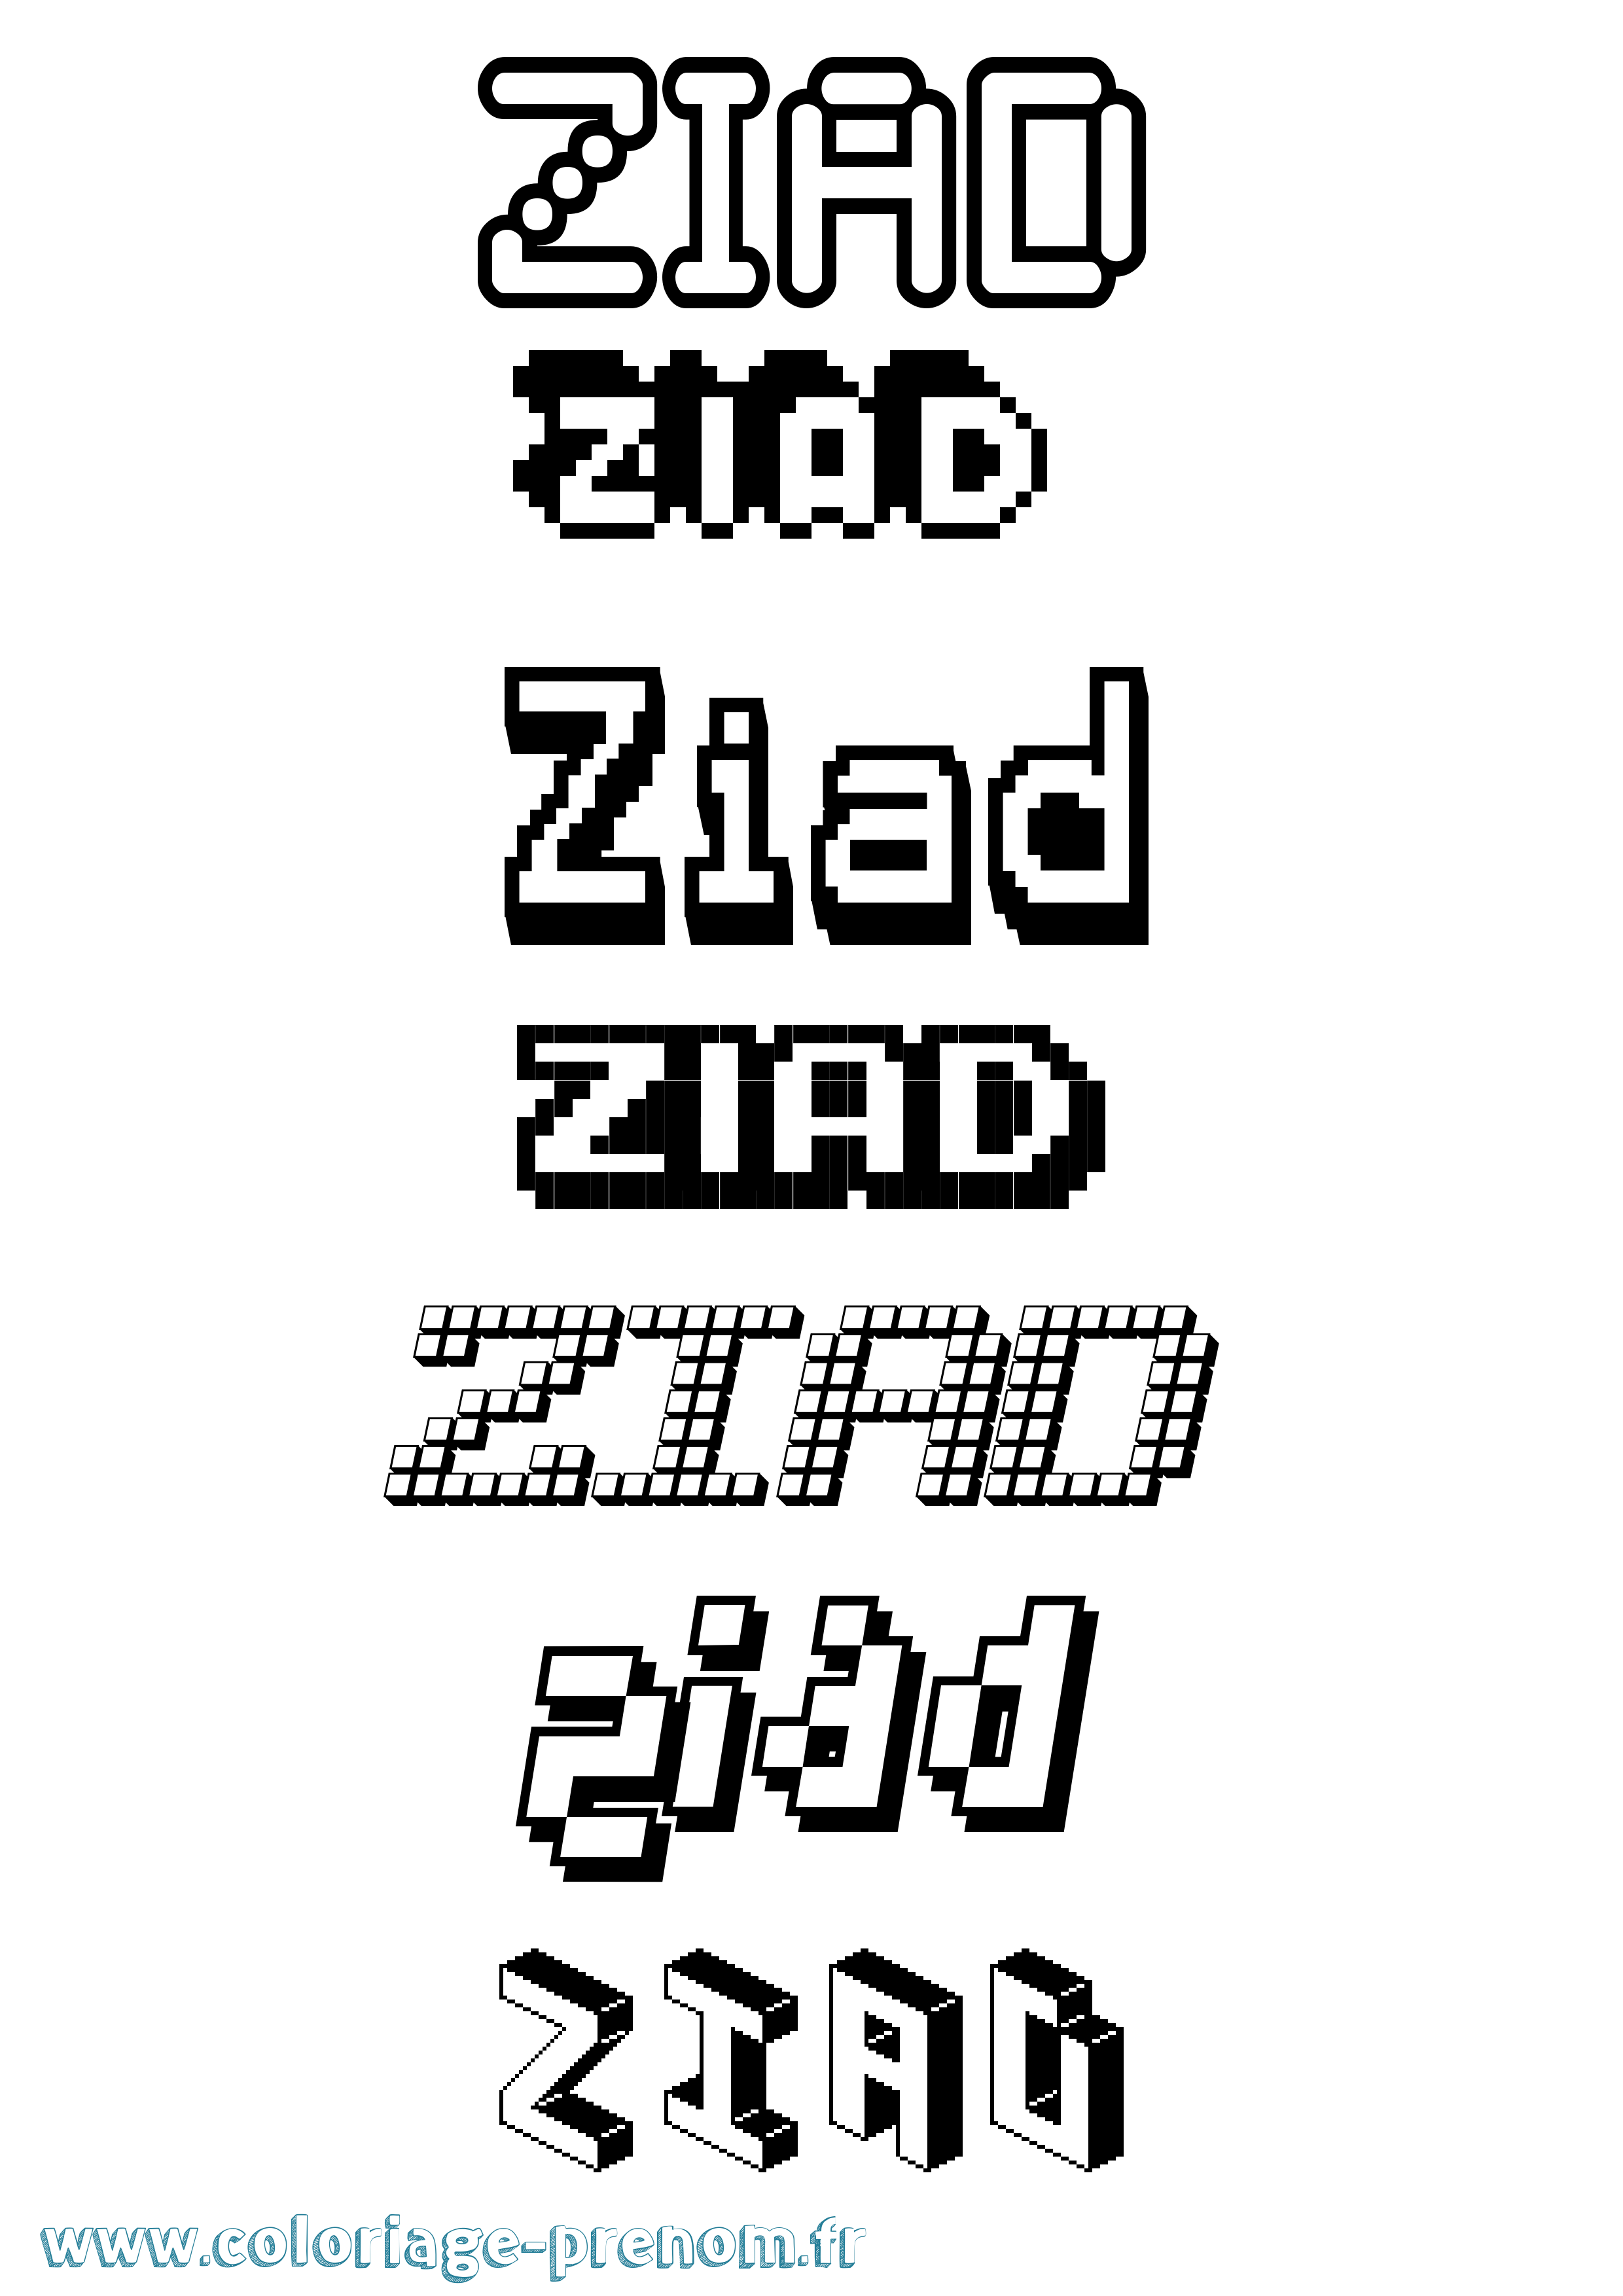 Coloriage prénom Ziad